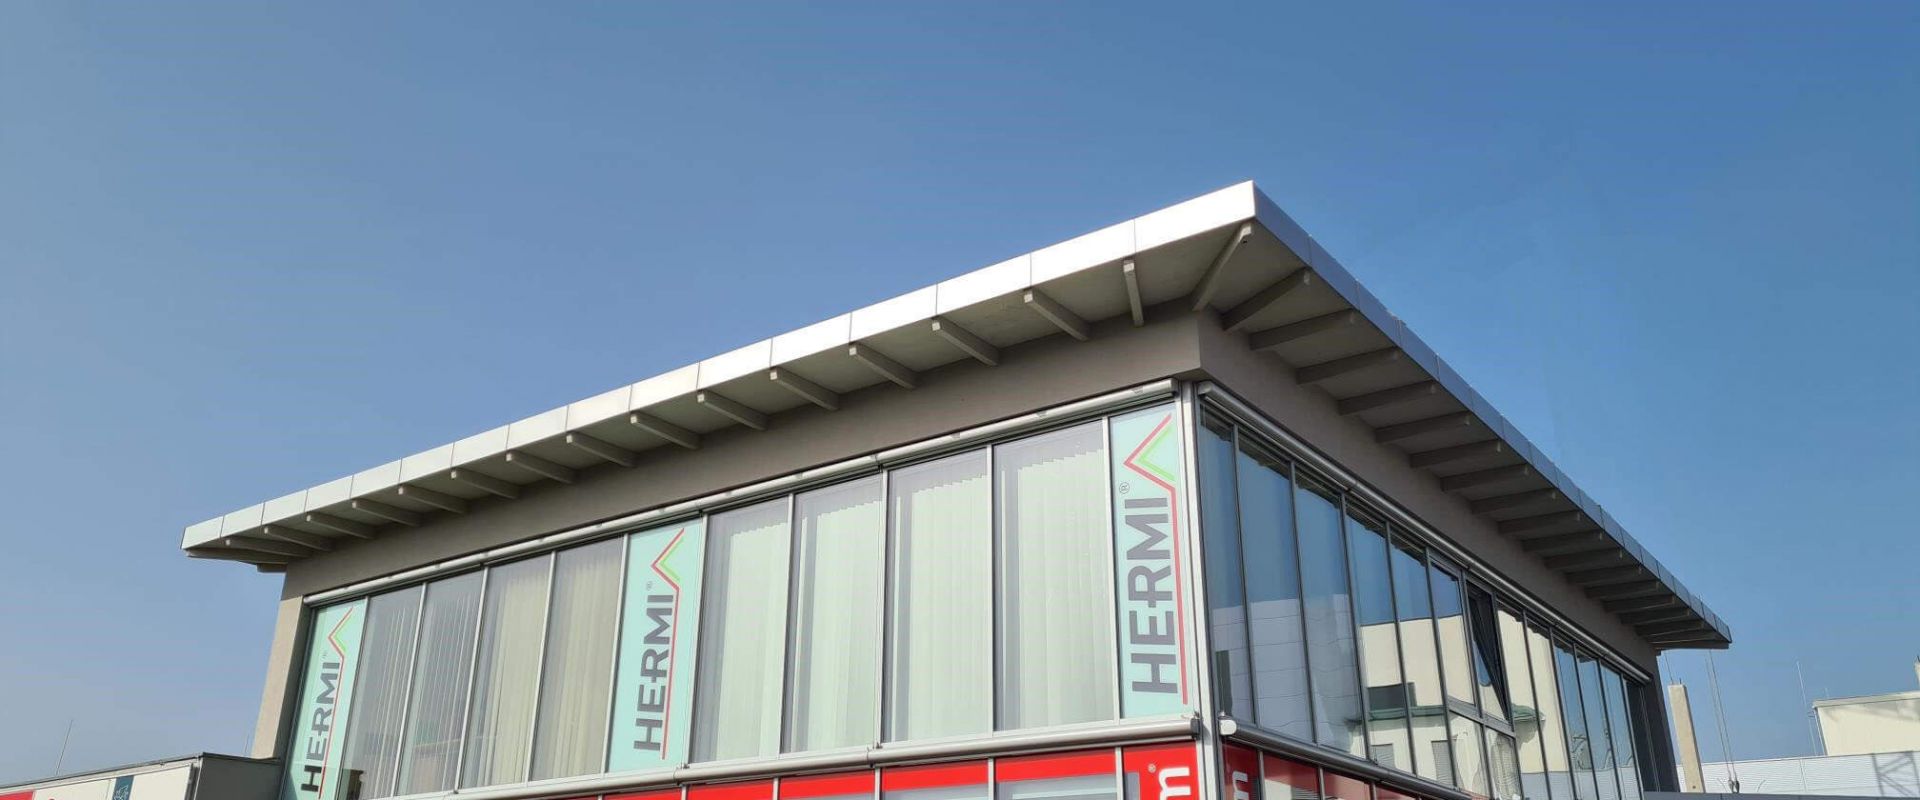 HERMI opens a new branch office in Upper Austria